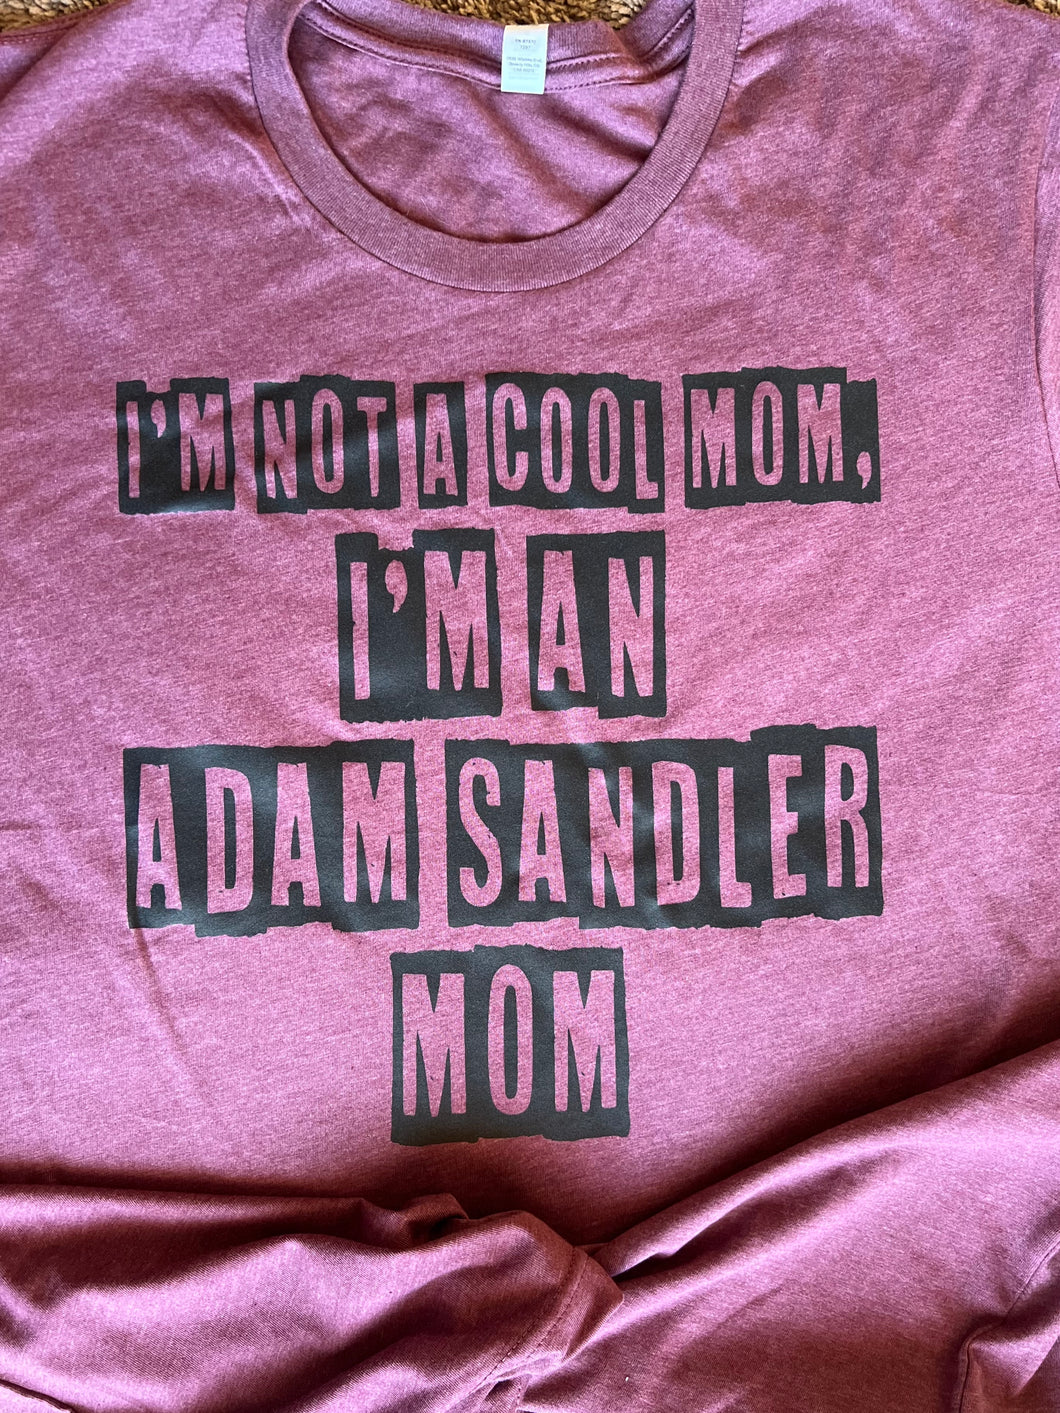 Adam Sandler Mom